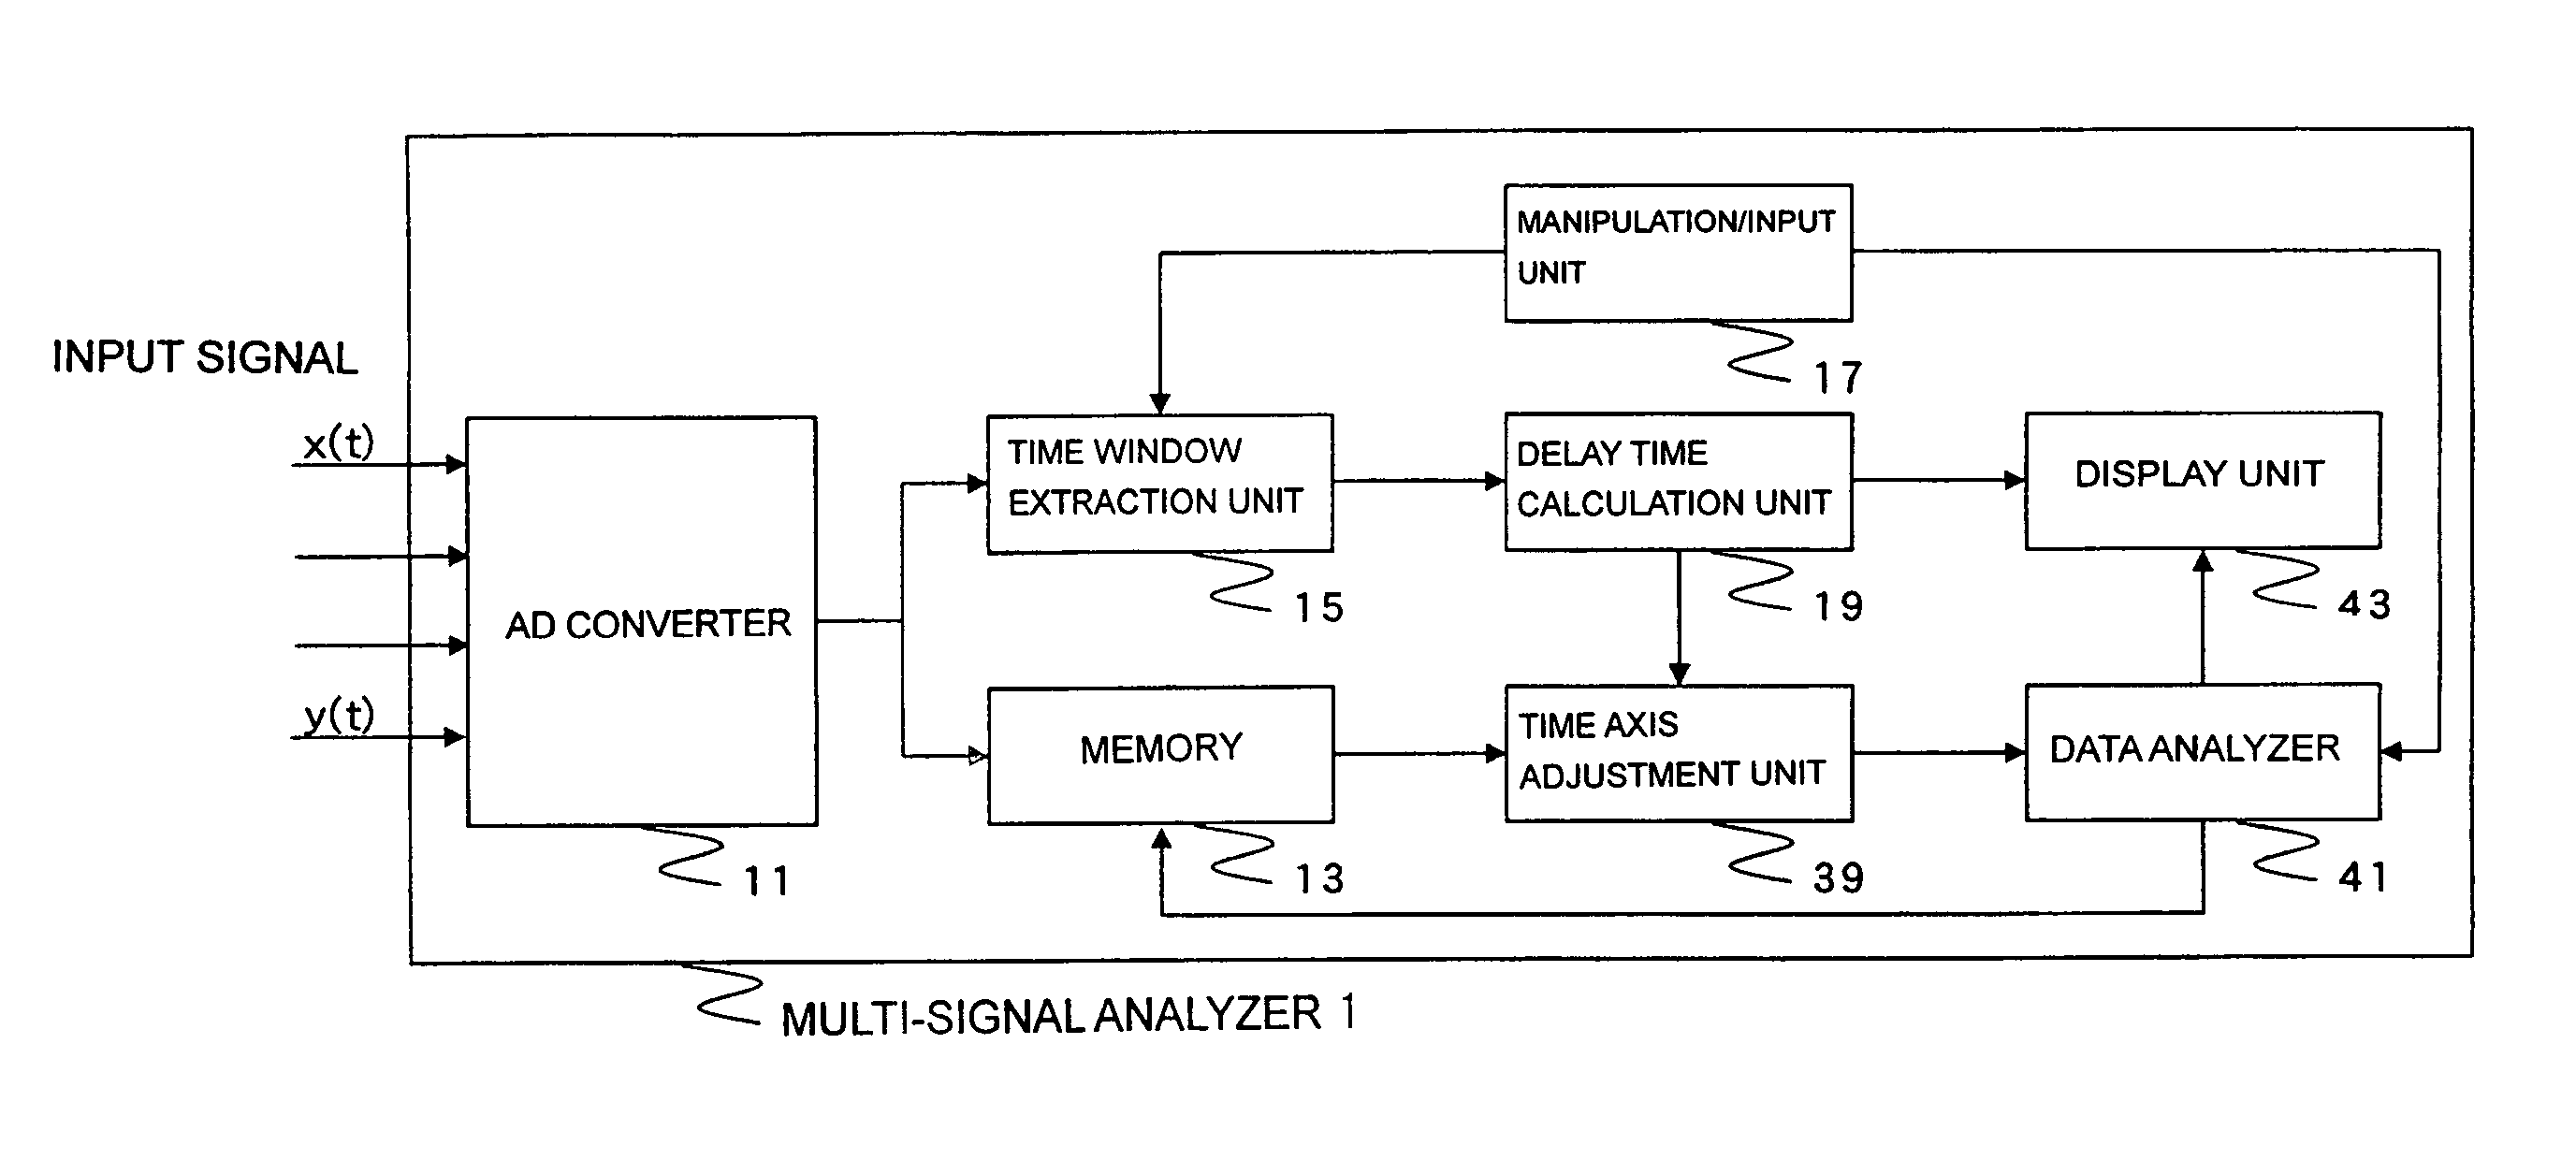 Multi-signal analysis device